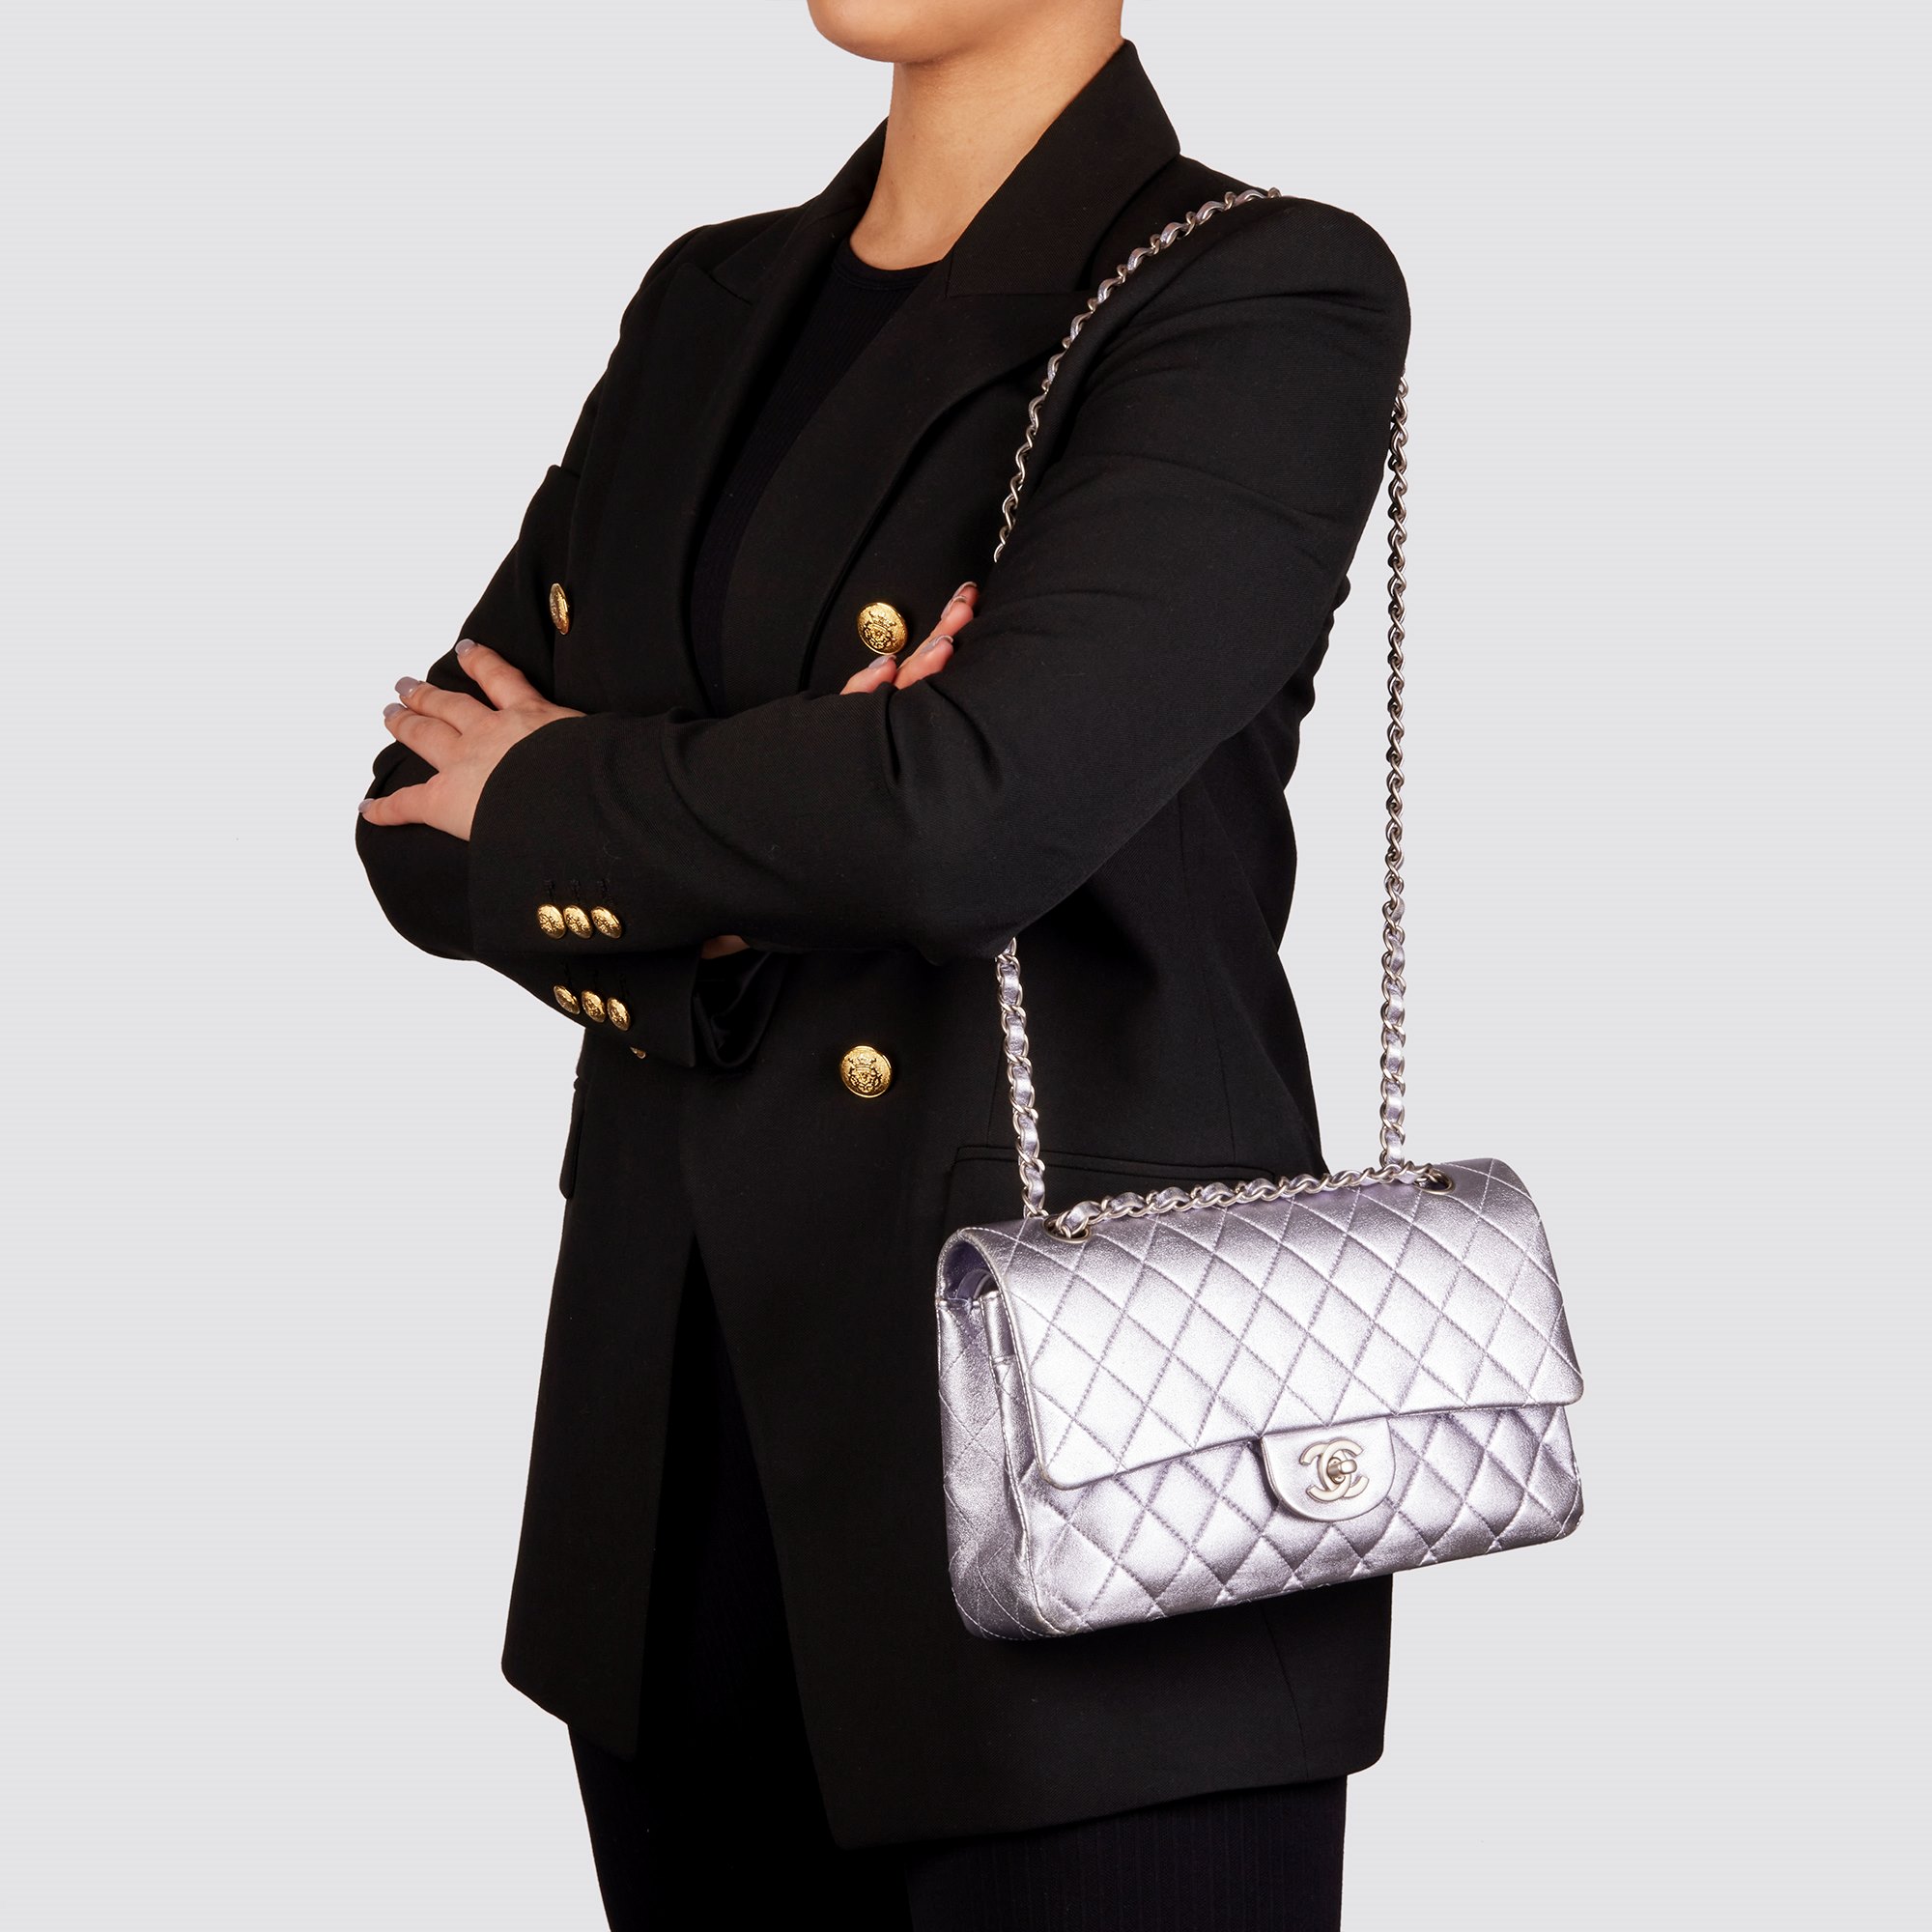 Chanel Medium Classic Double Flap Bag 2010 HB4348 | Second Hand Handbags